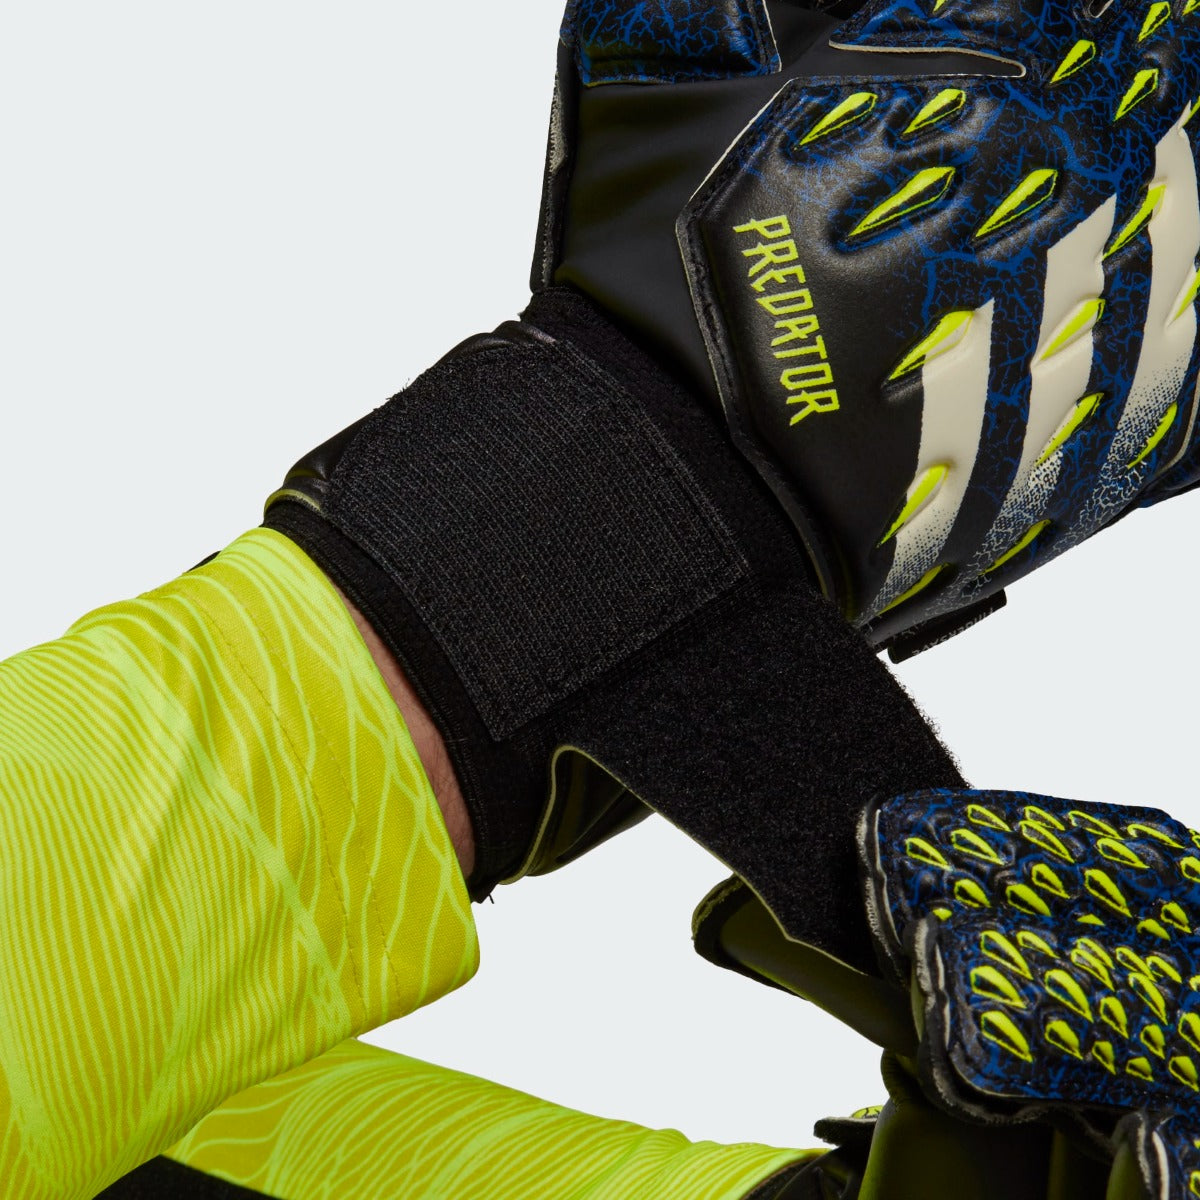 Adidas Predator 20 Match Fingersave Goalkeeper Gloves - Black-Volt-White